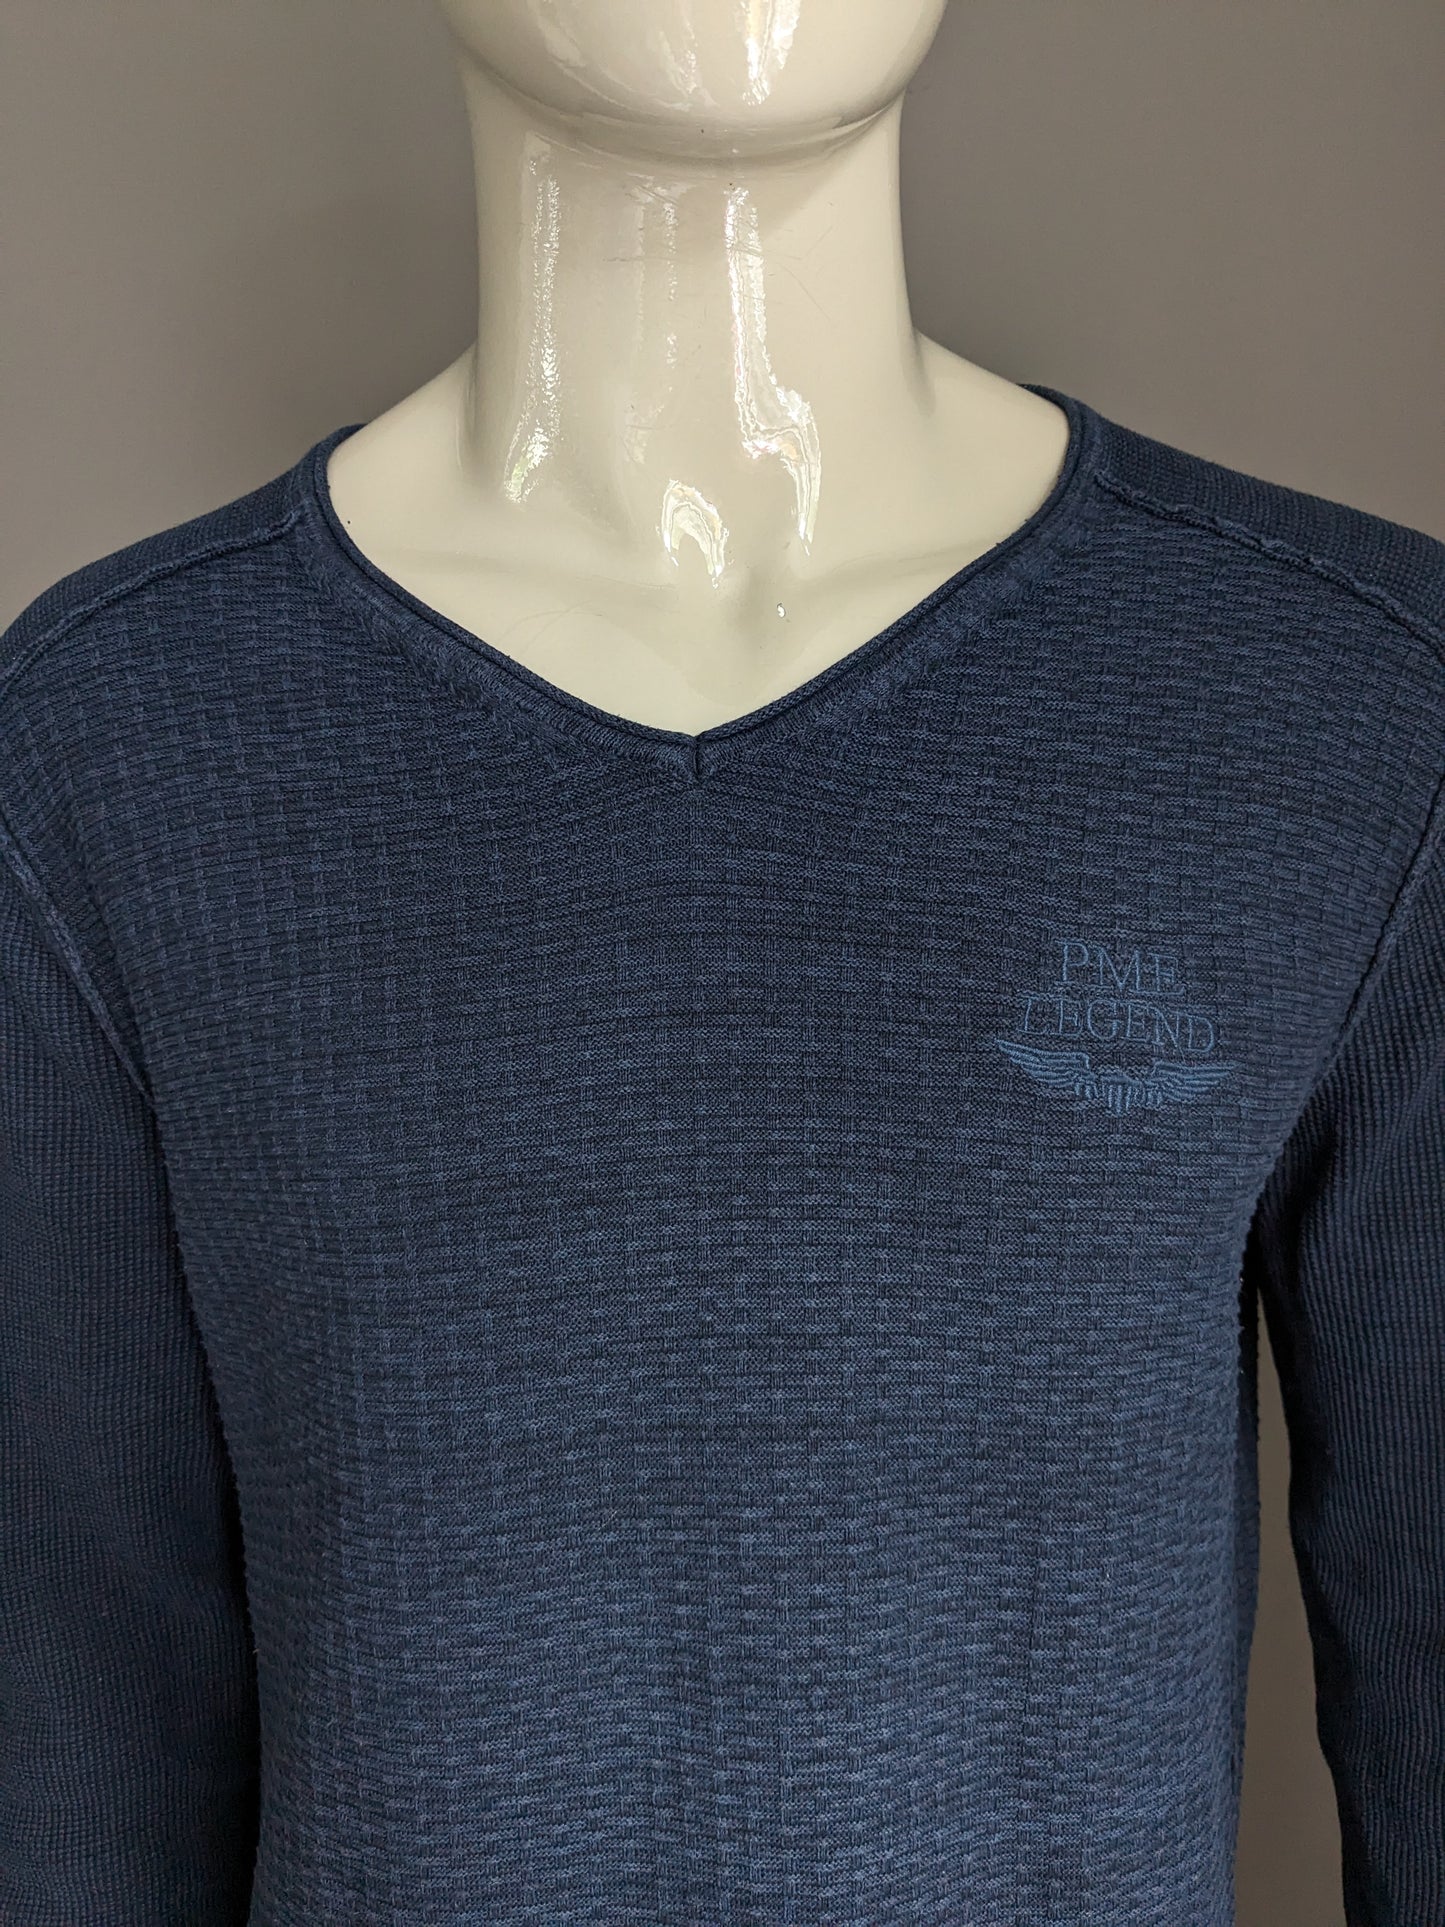 PME Legend sweater with v-neck. Dark Blue tactile motif. Size XL.